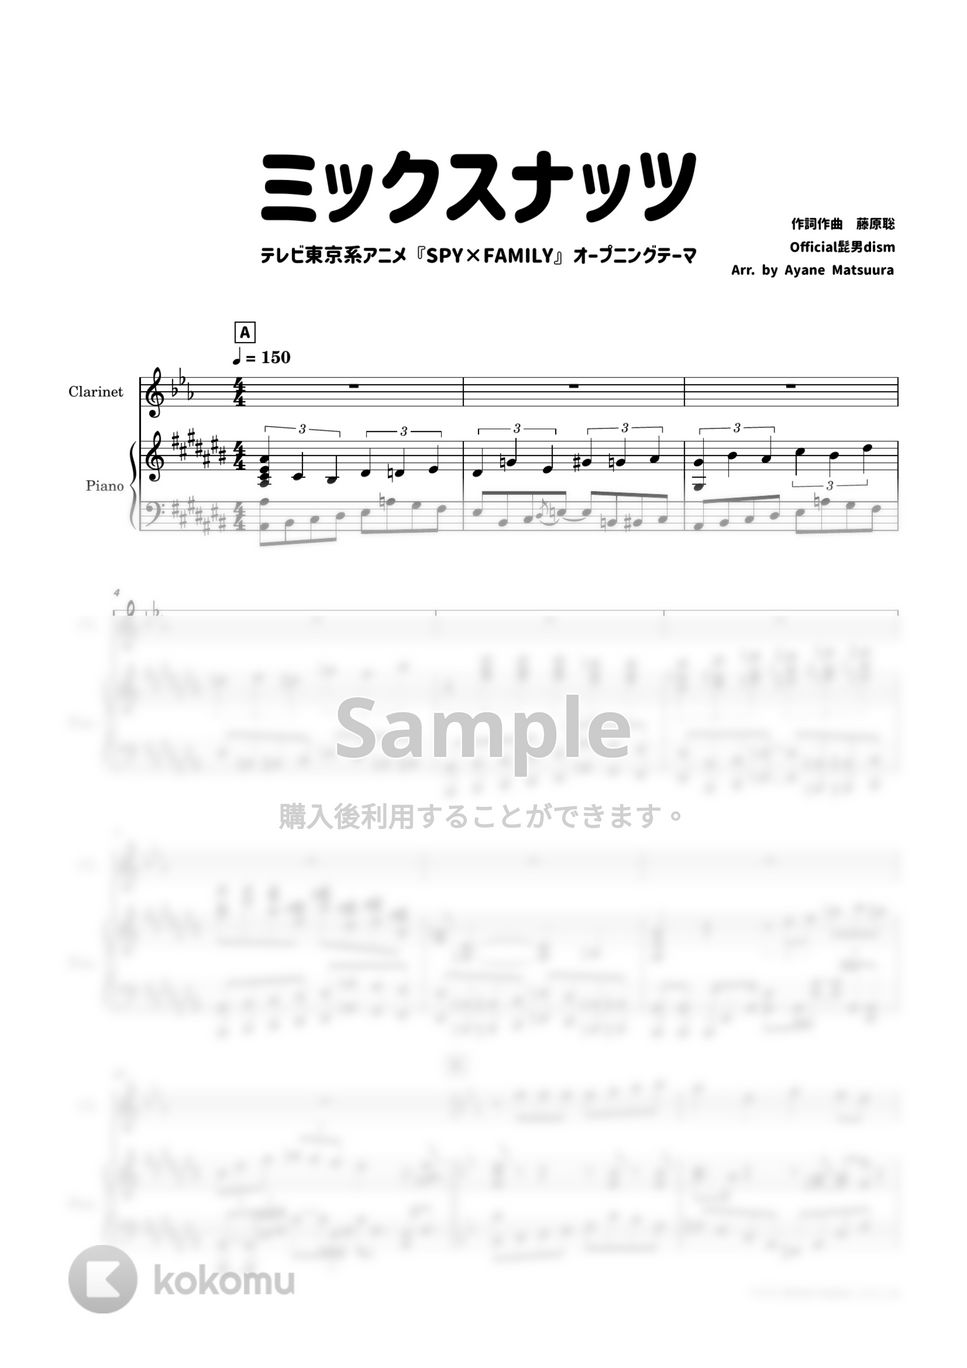 Official髭男dism - 【クラリネット＆ピアノ】なし＆♭3ミックスナッツ（Official髭男dism） by 管楽器の楽譜★ふるすこあ